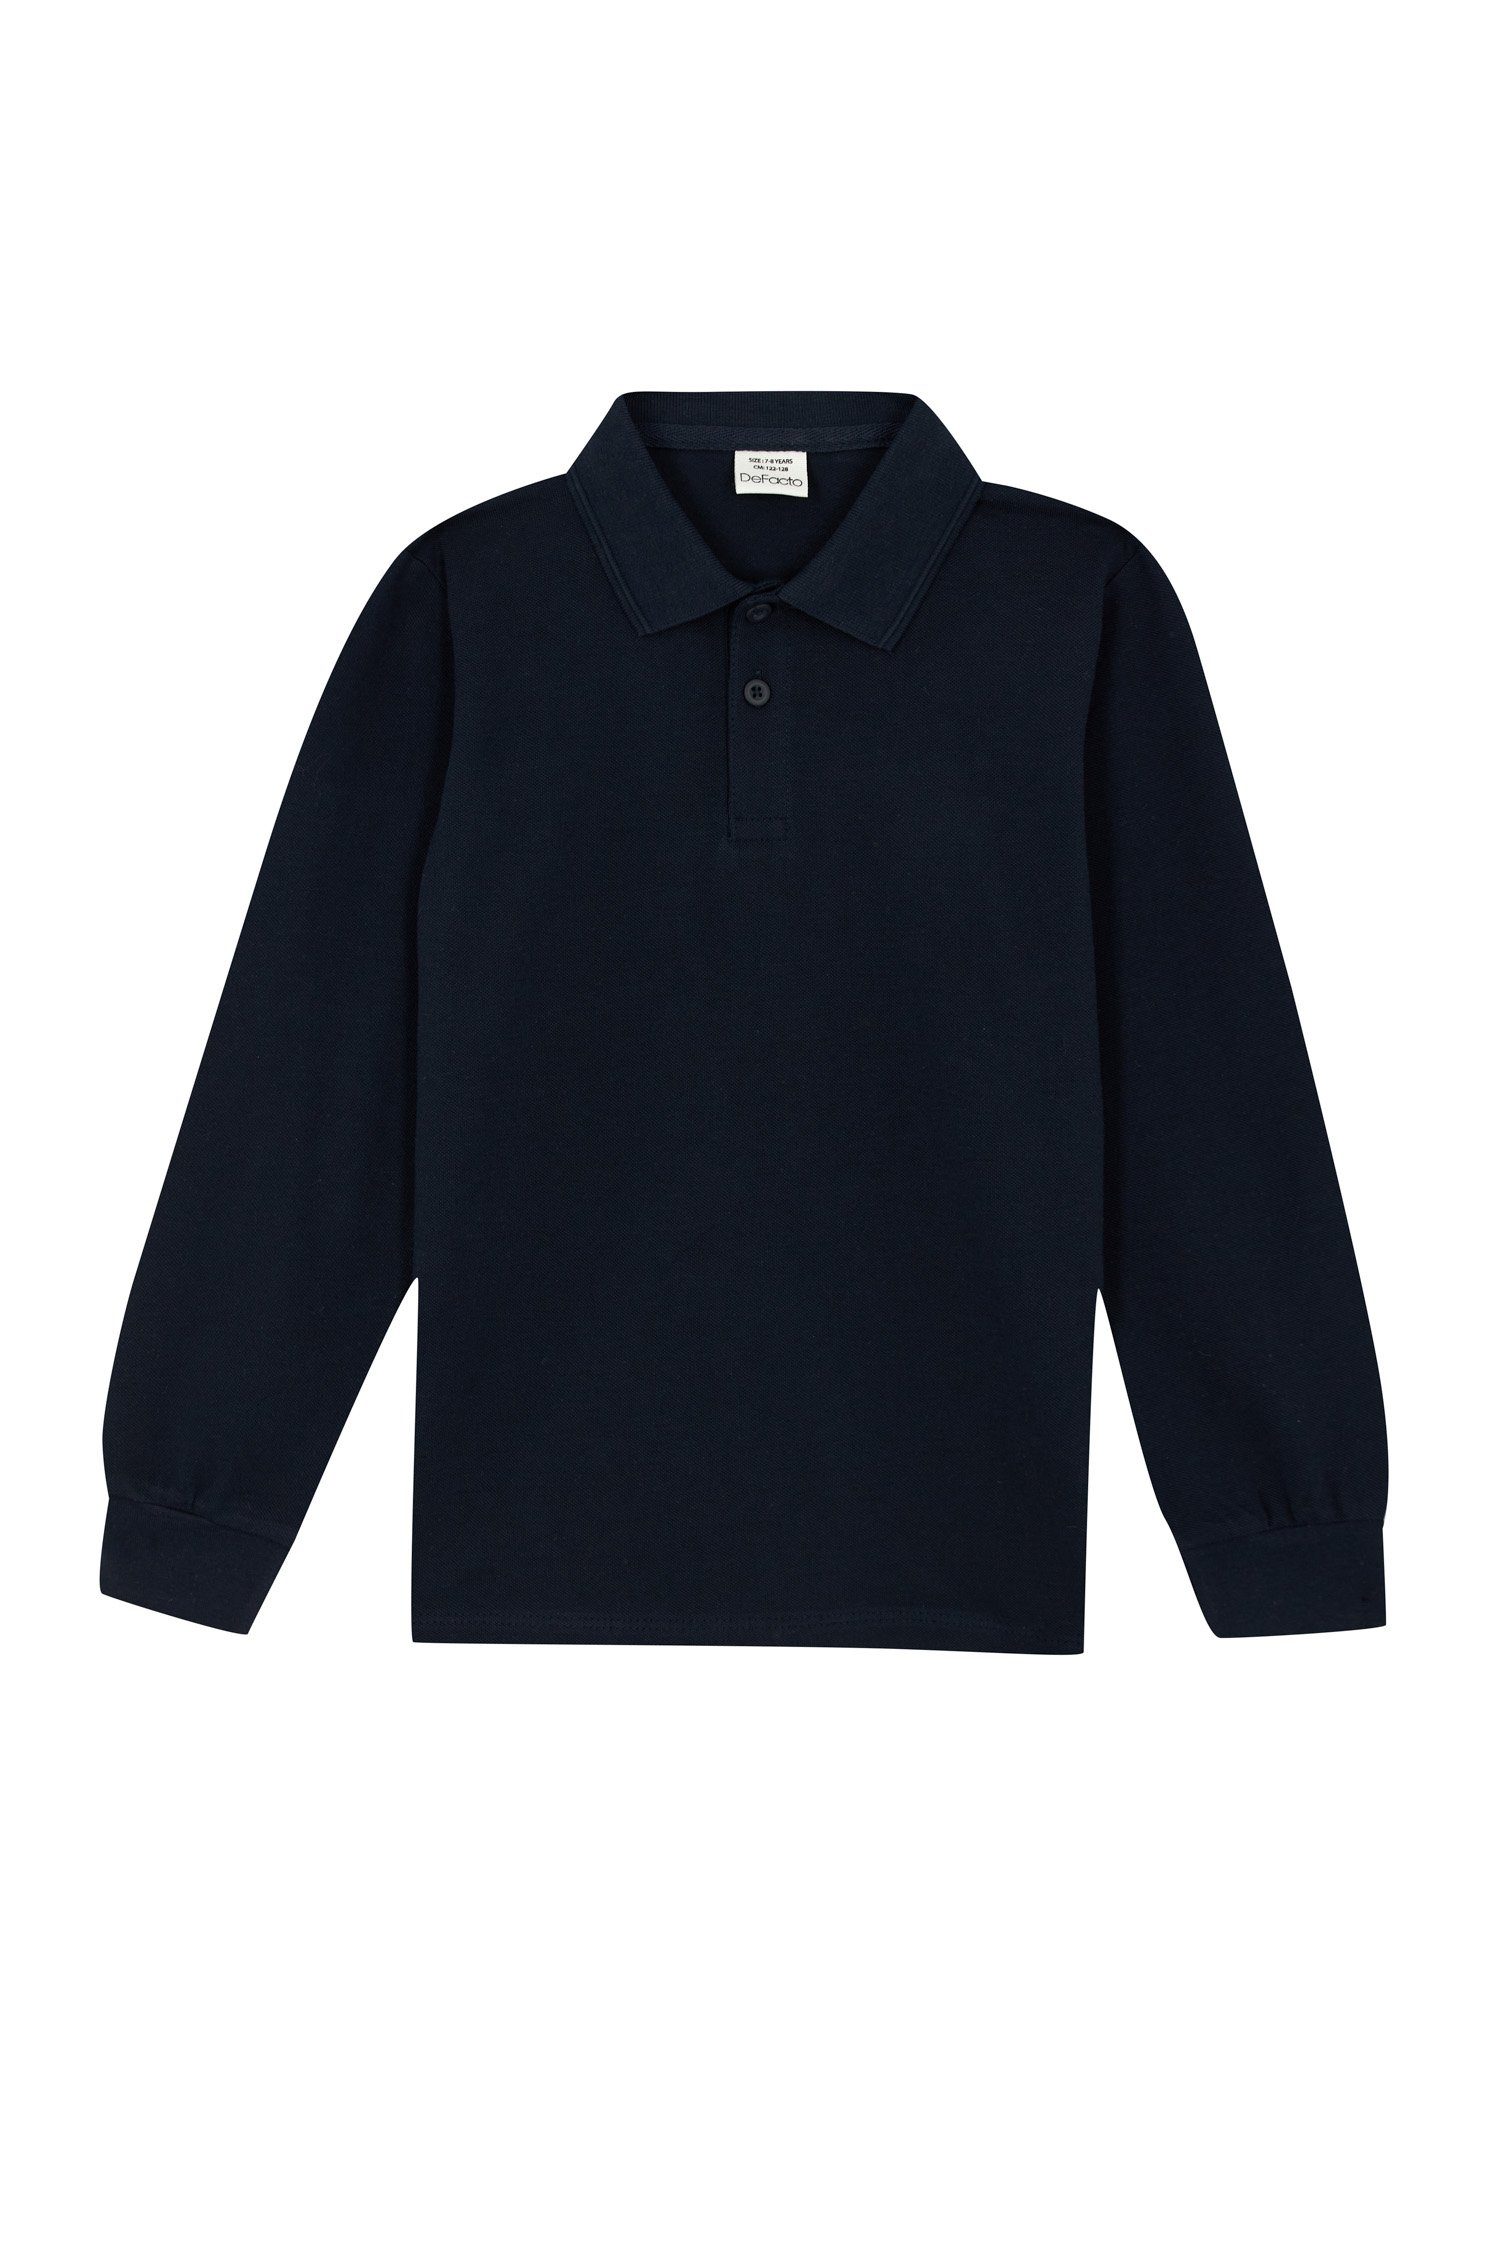 Polo DeFacto REGULAR FIT Jungen Marineblau Langarm-Poloshirt T-Shirt